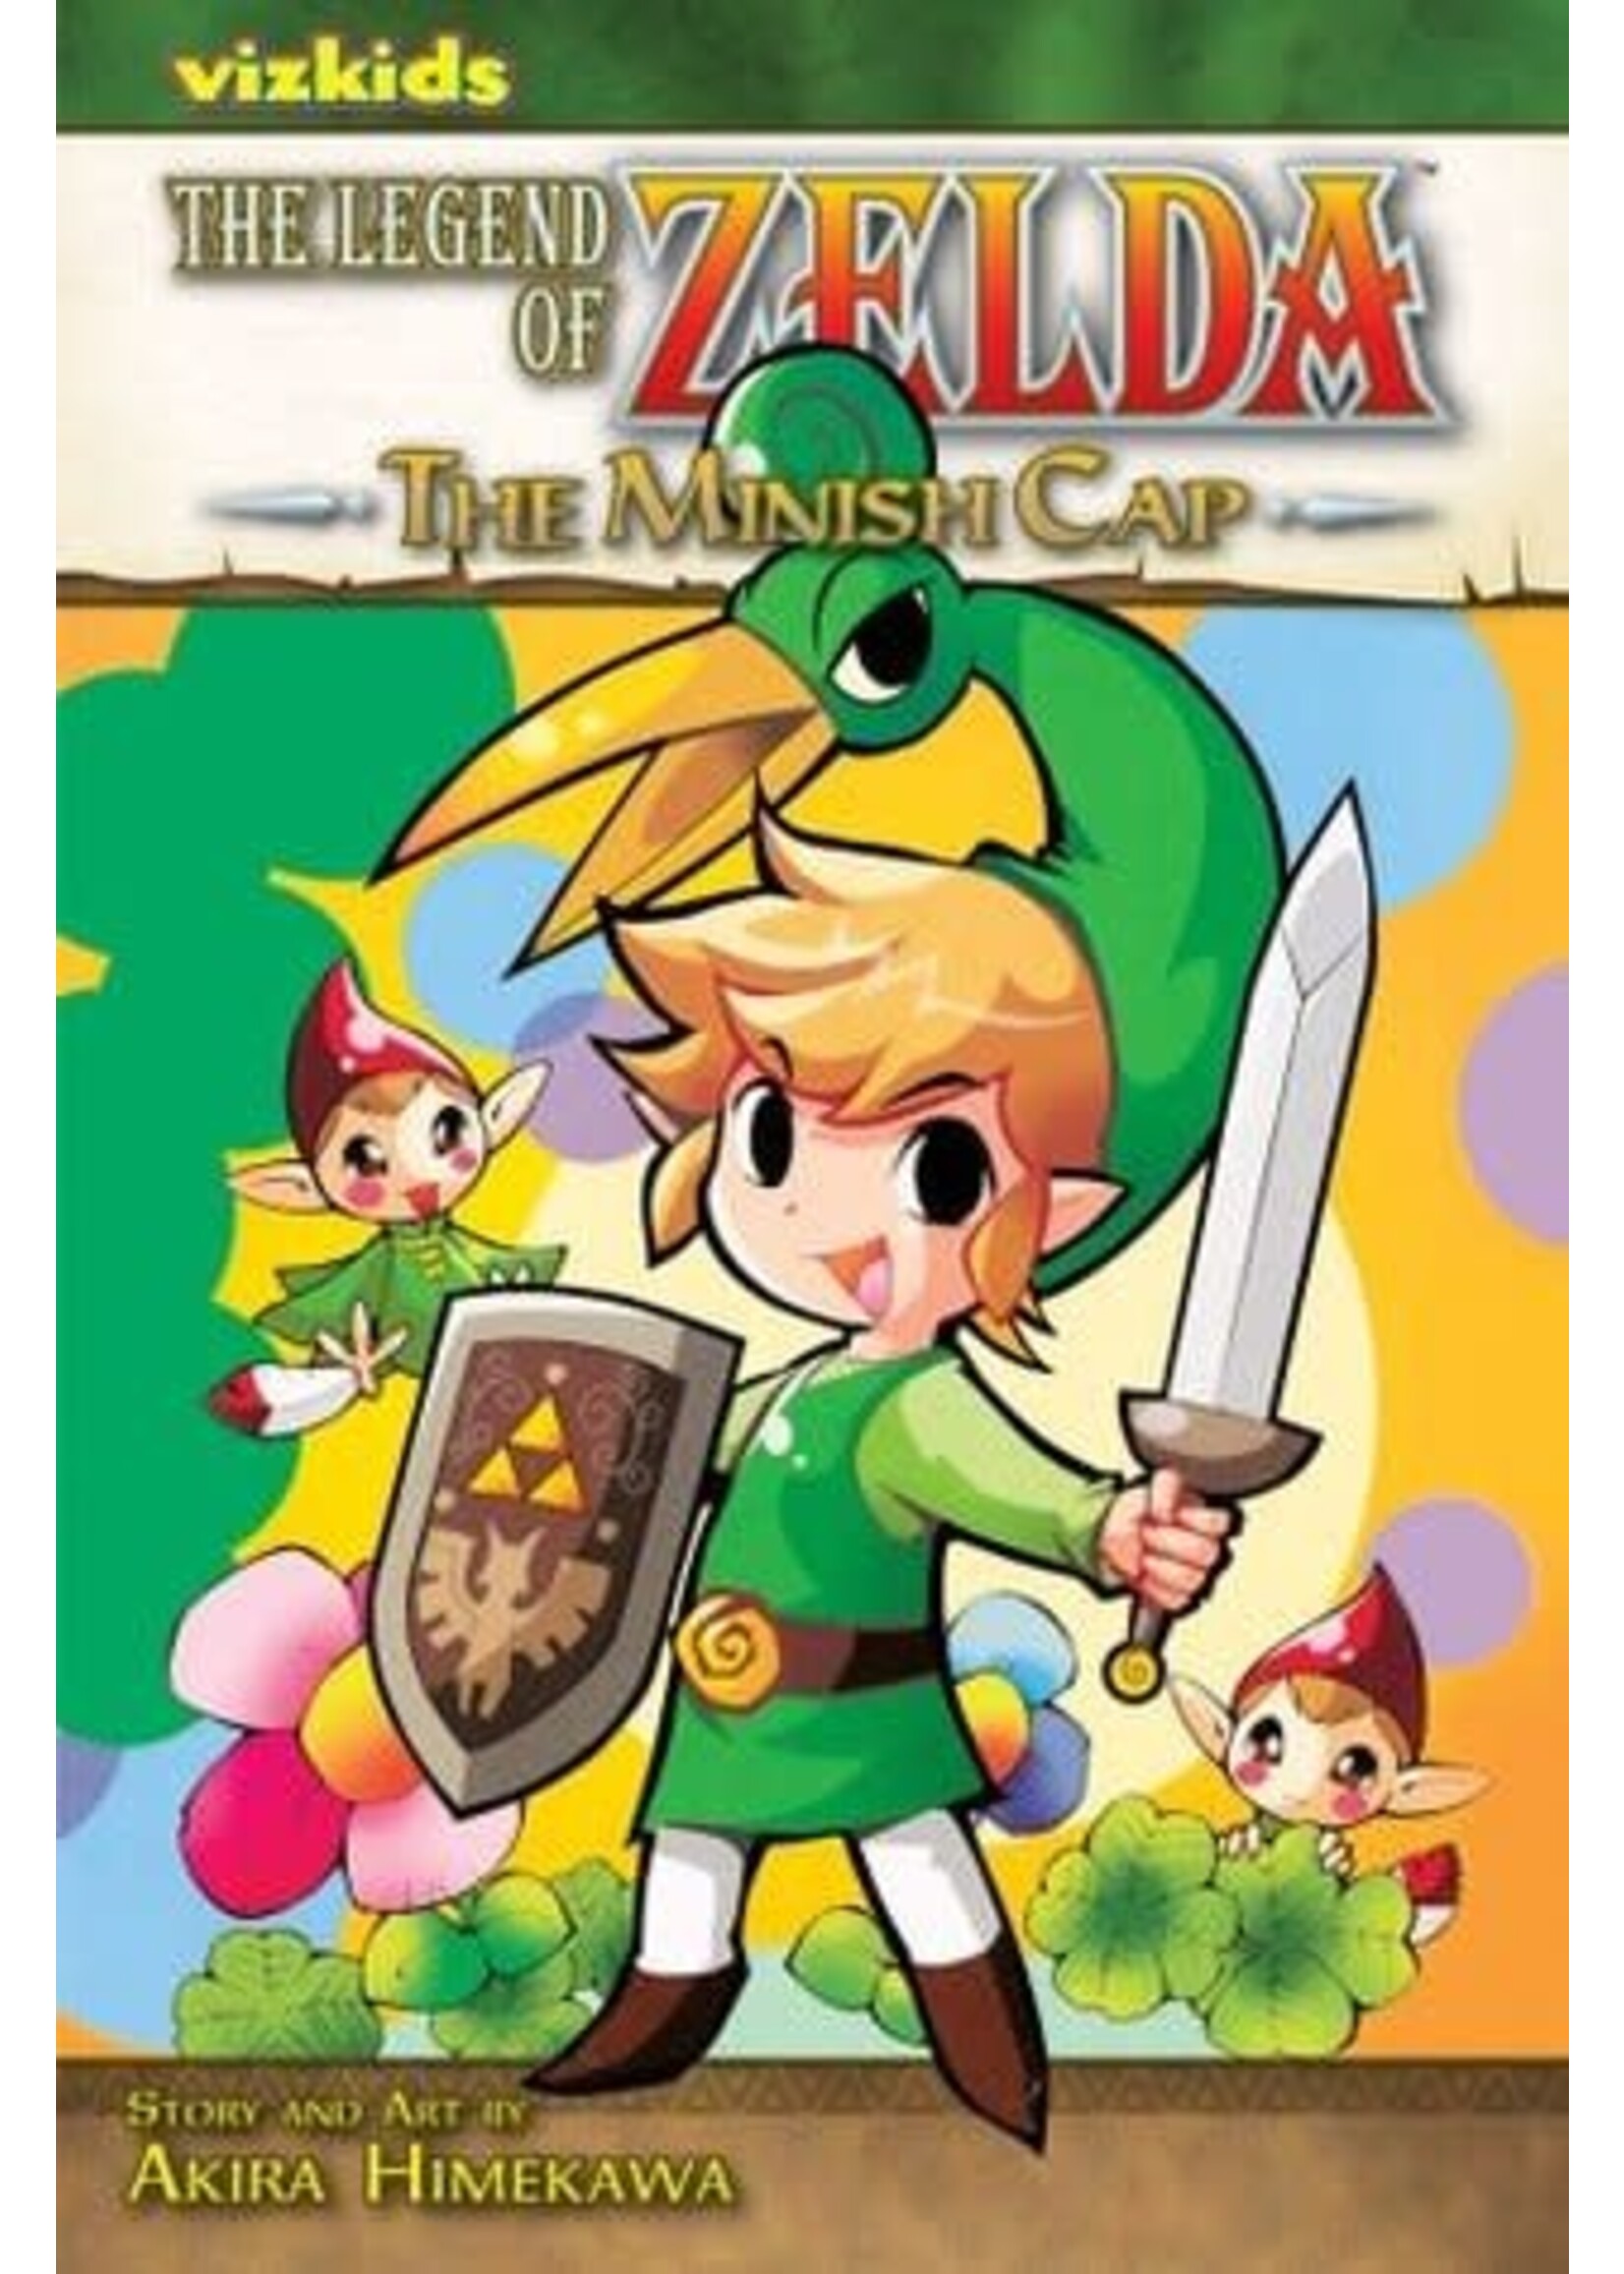 The Legend of Zelda: The Minish Cap (The Legend of Zelda #8) by Akira Himekawa